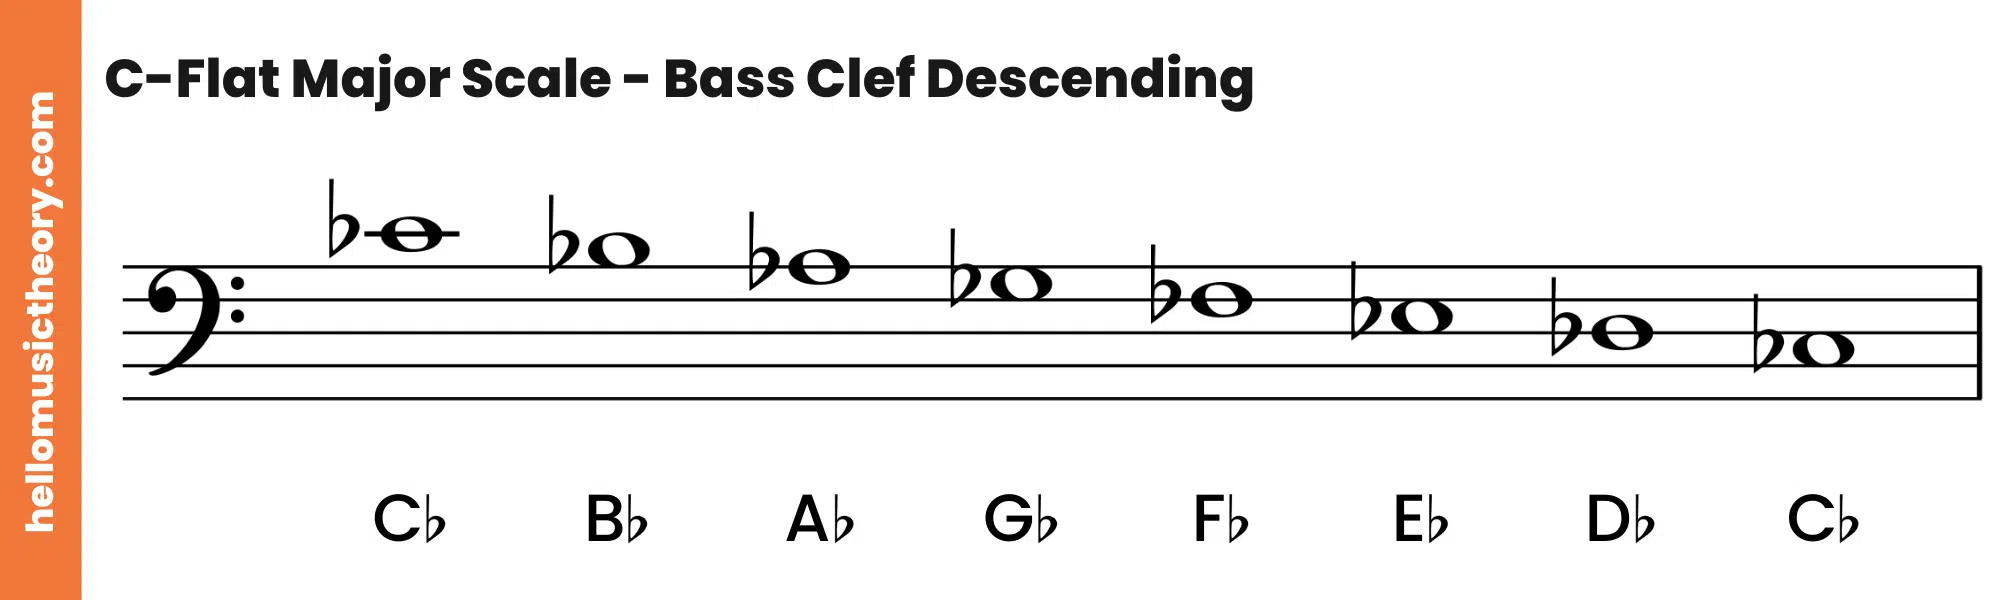 C-Flat Major Scale Bass Clef Descending